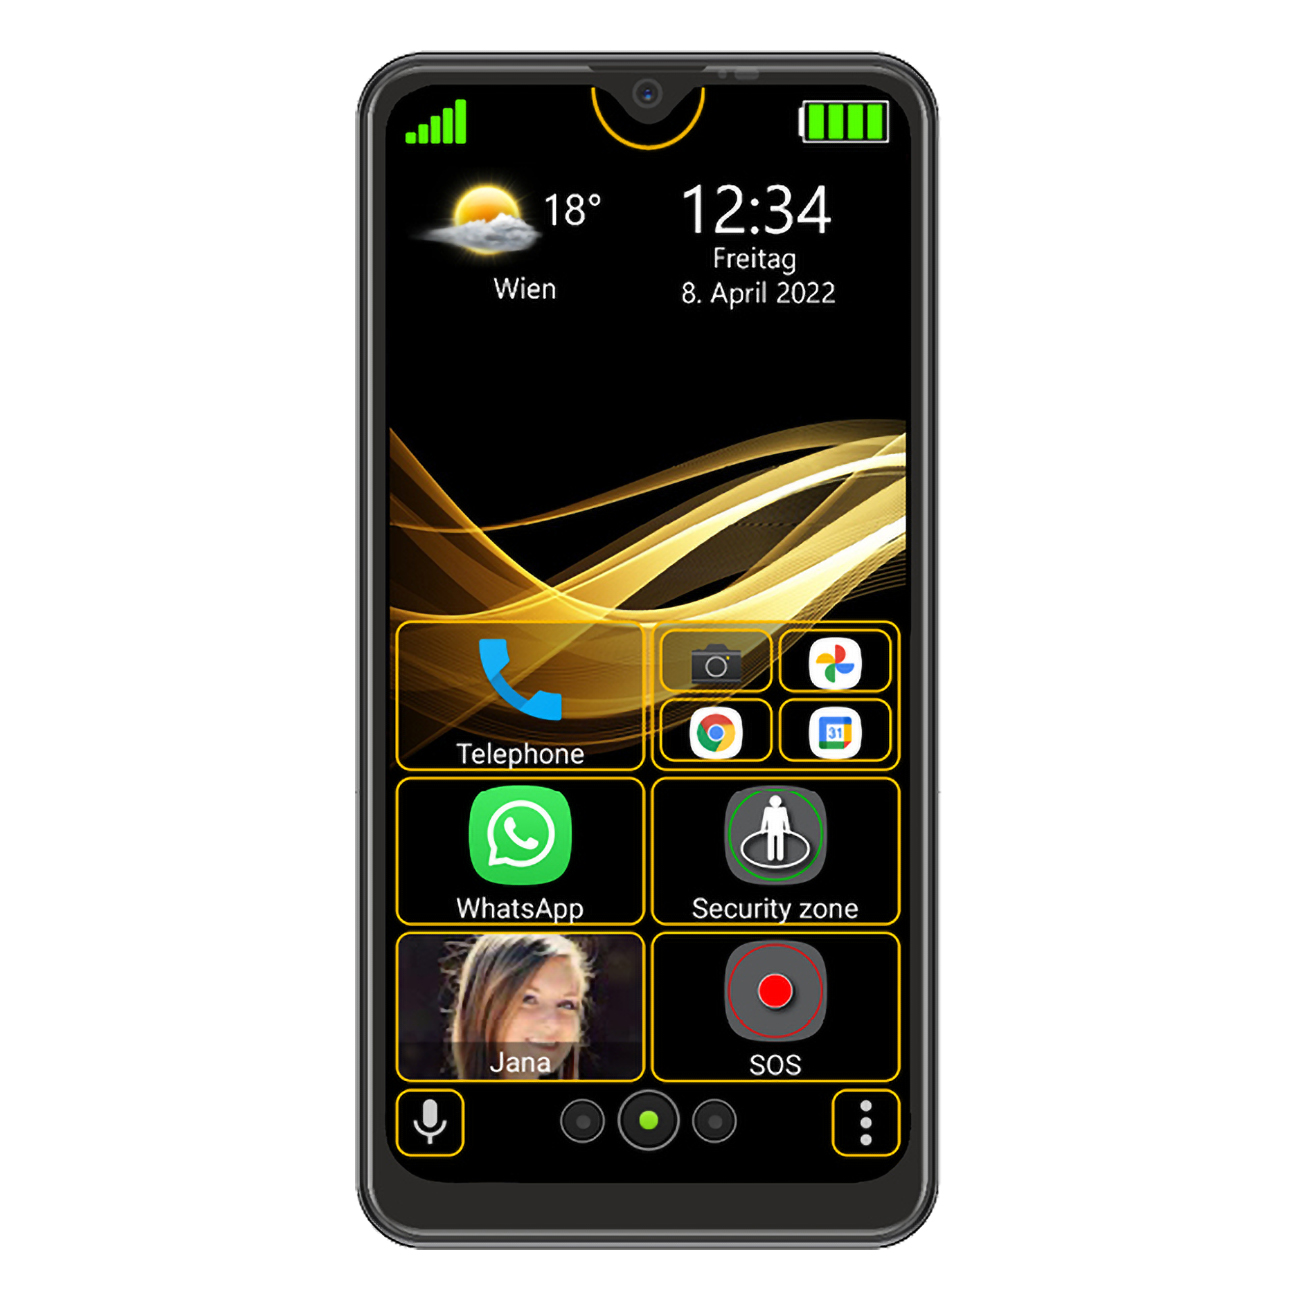 Bea-fon M6s plus schwarz | Seniorenhandy | Touch Display | Android 10 | SOS-Taste | Fingerprint-Sensor zum einfachen Entsperren von bea-fon